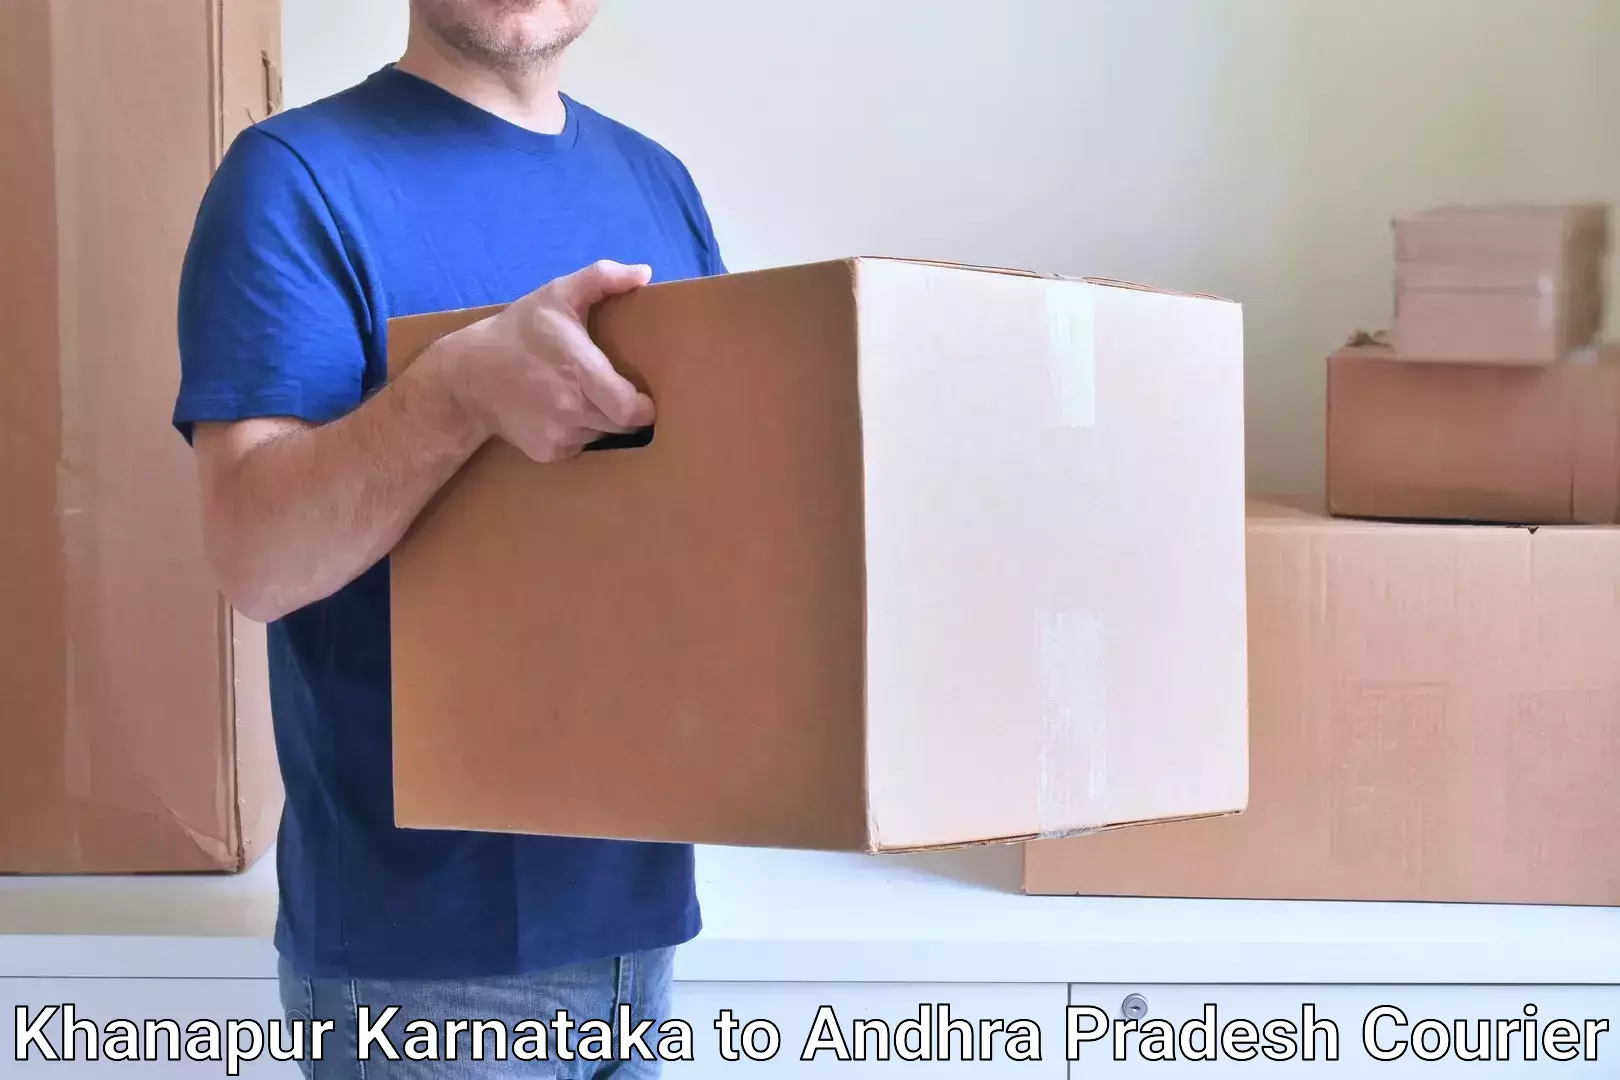 Efficient shipping operations Khanapur Karnataka to Challapalli